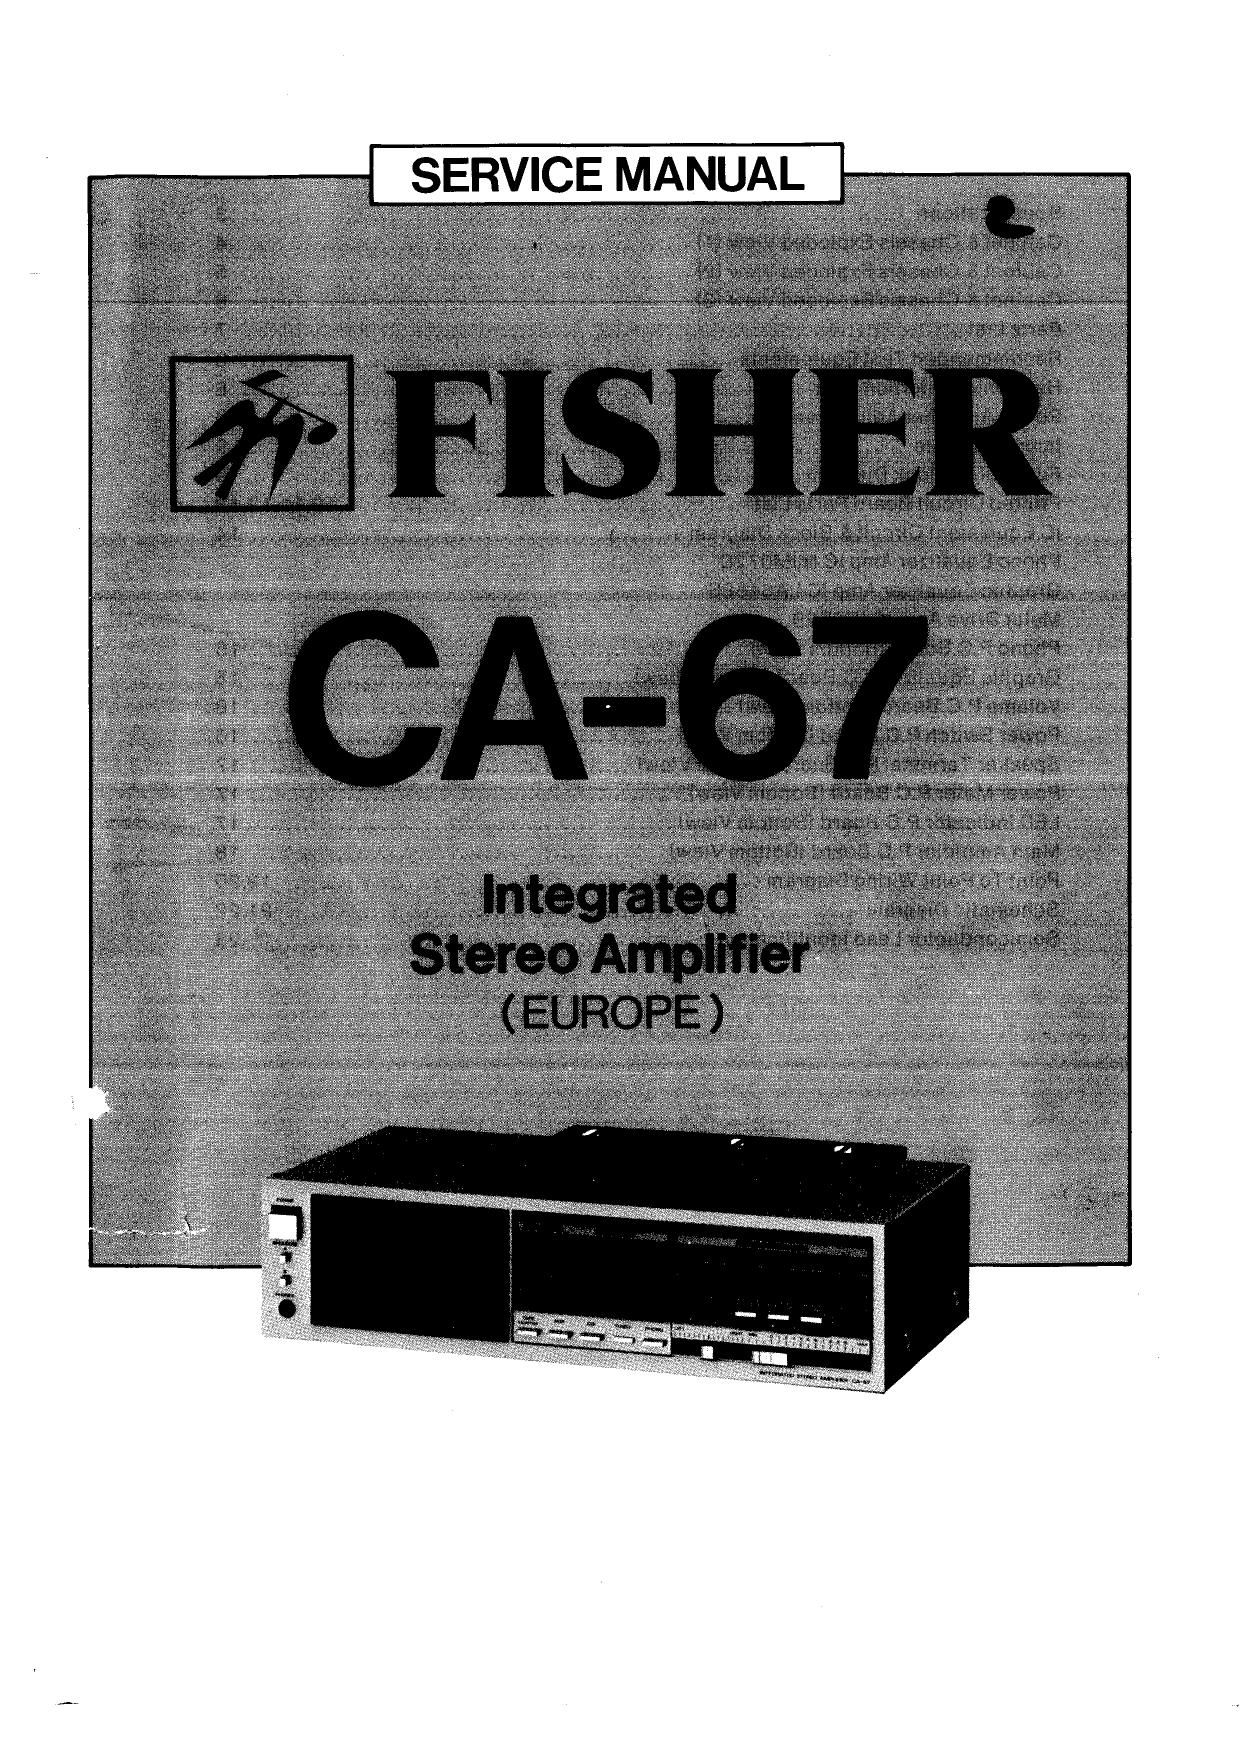 Fisher CA 67 Service Manual